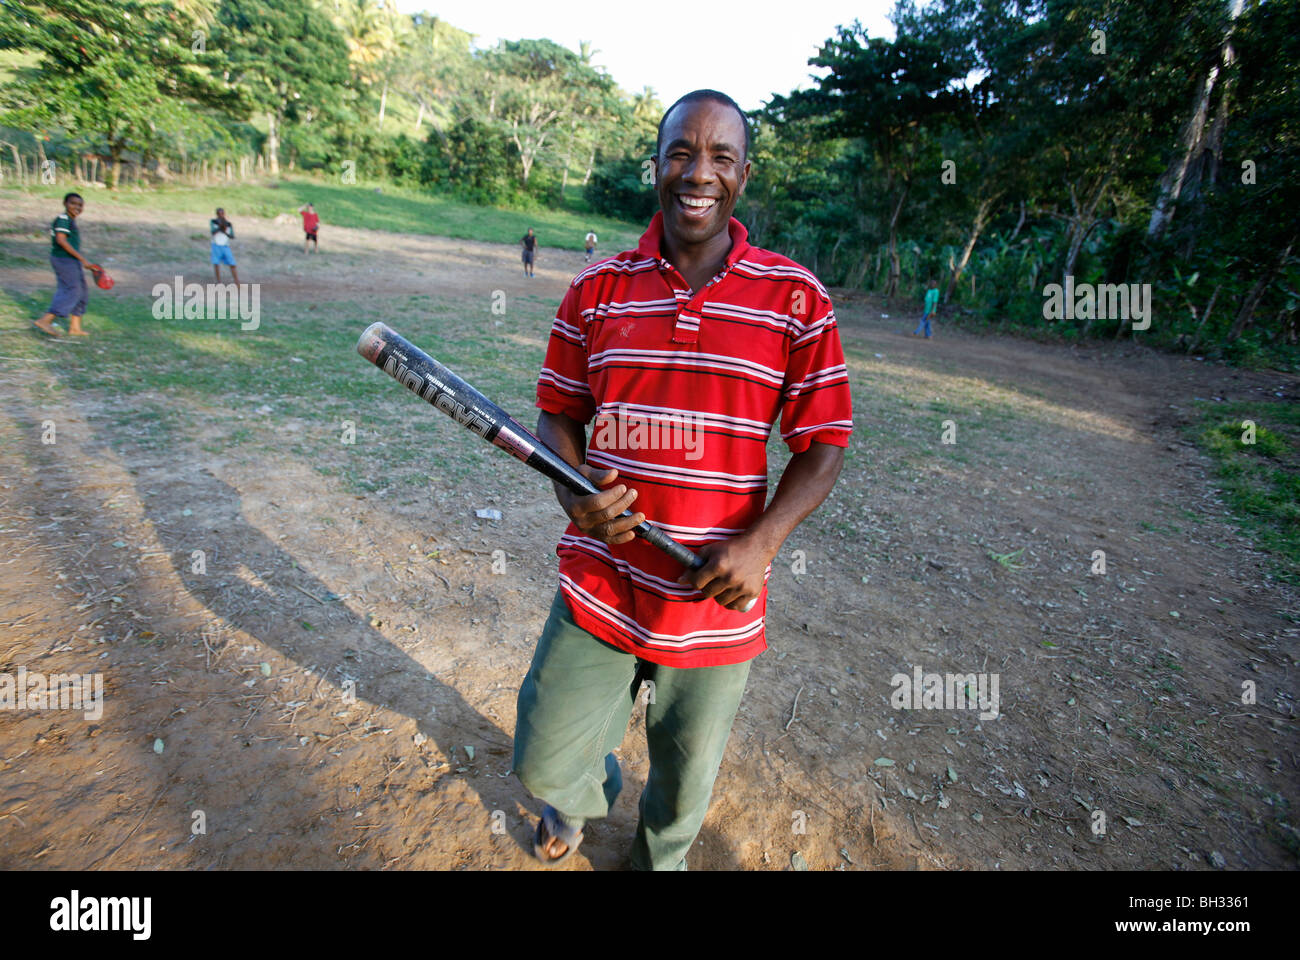 Adult supervisor at a boys informal baseball game, Dominican Republic Stock Photo